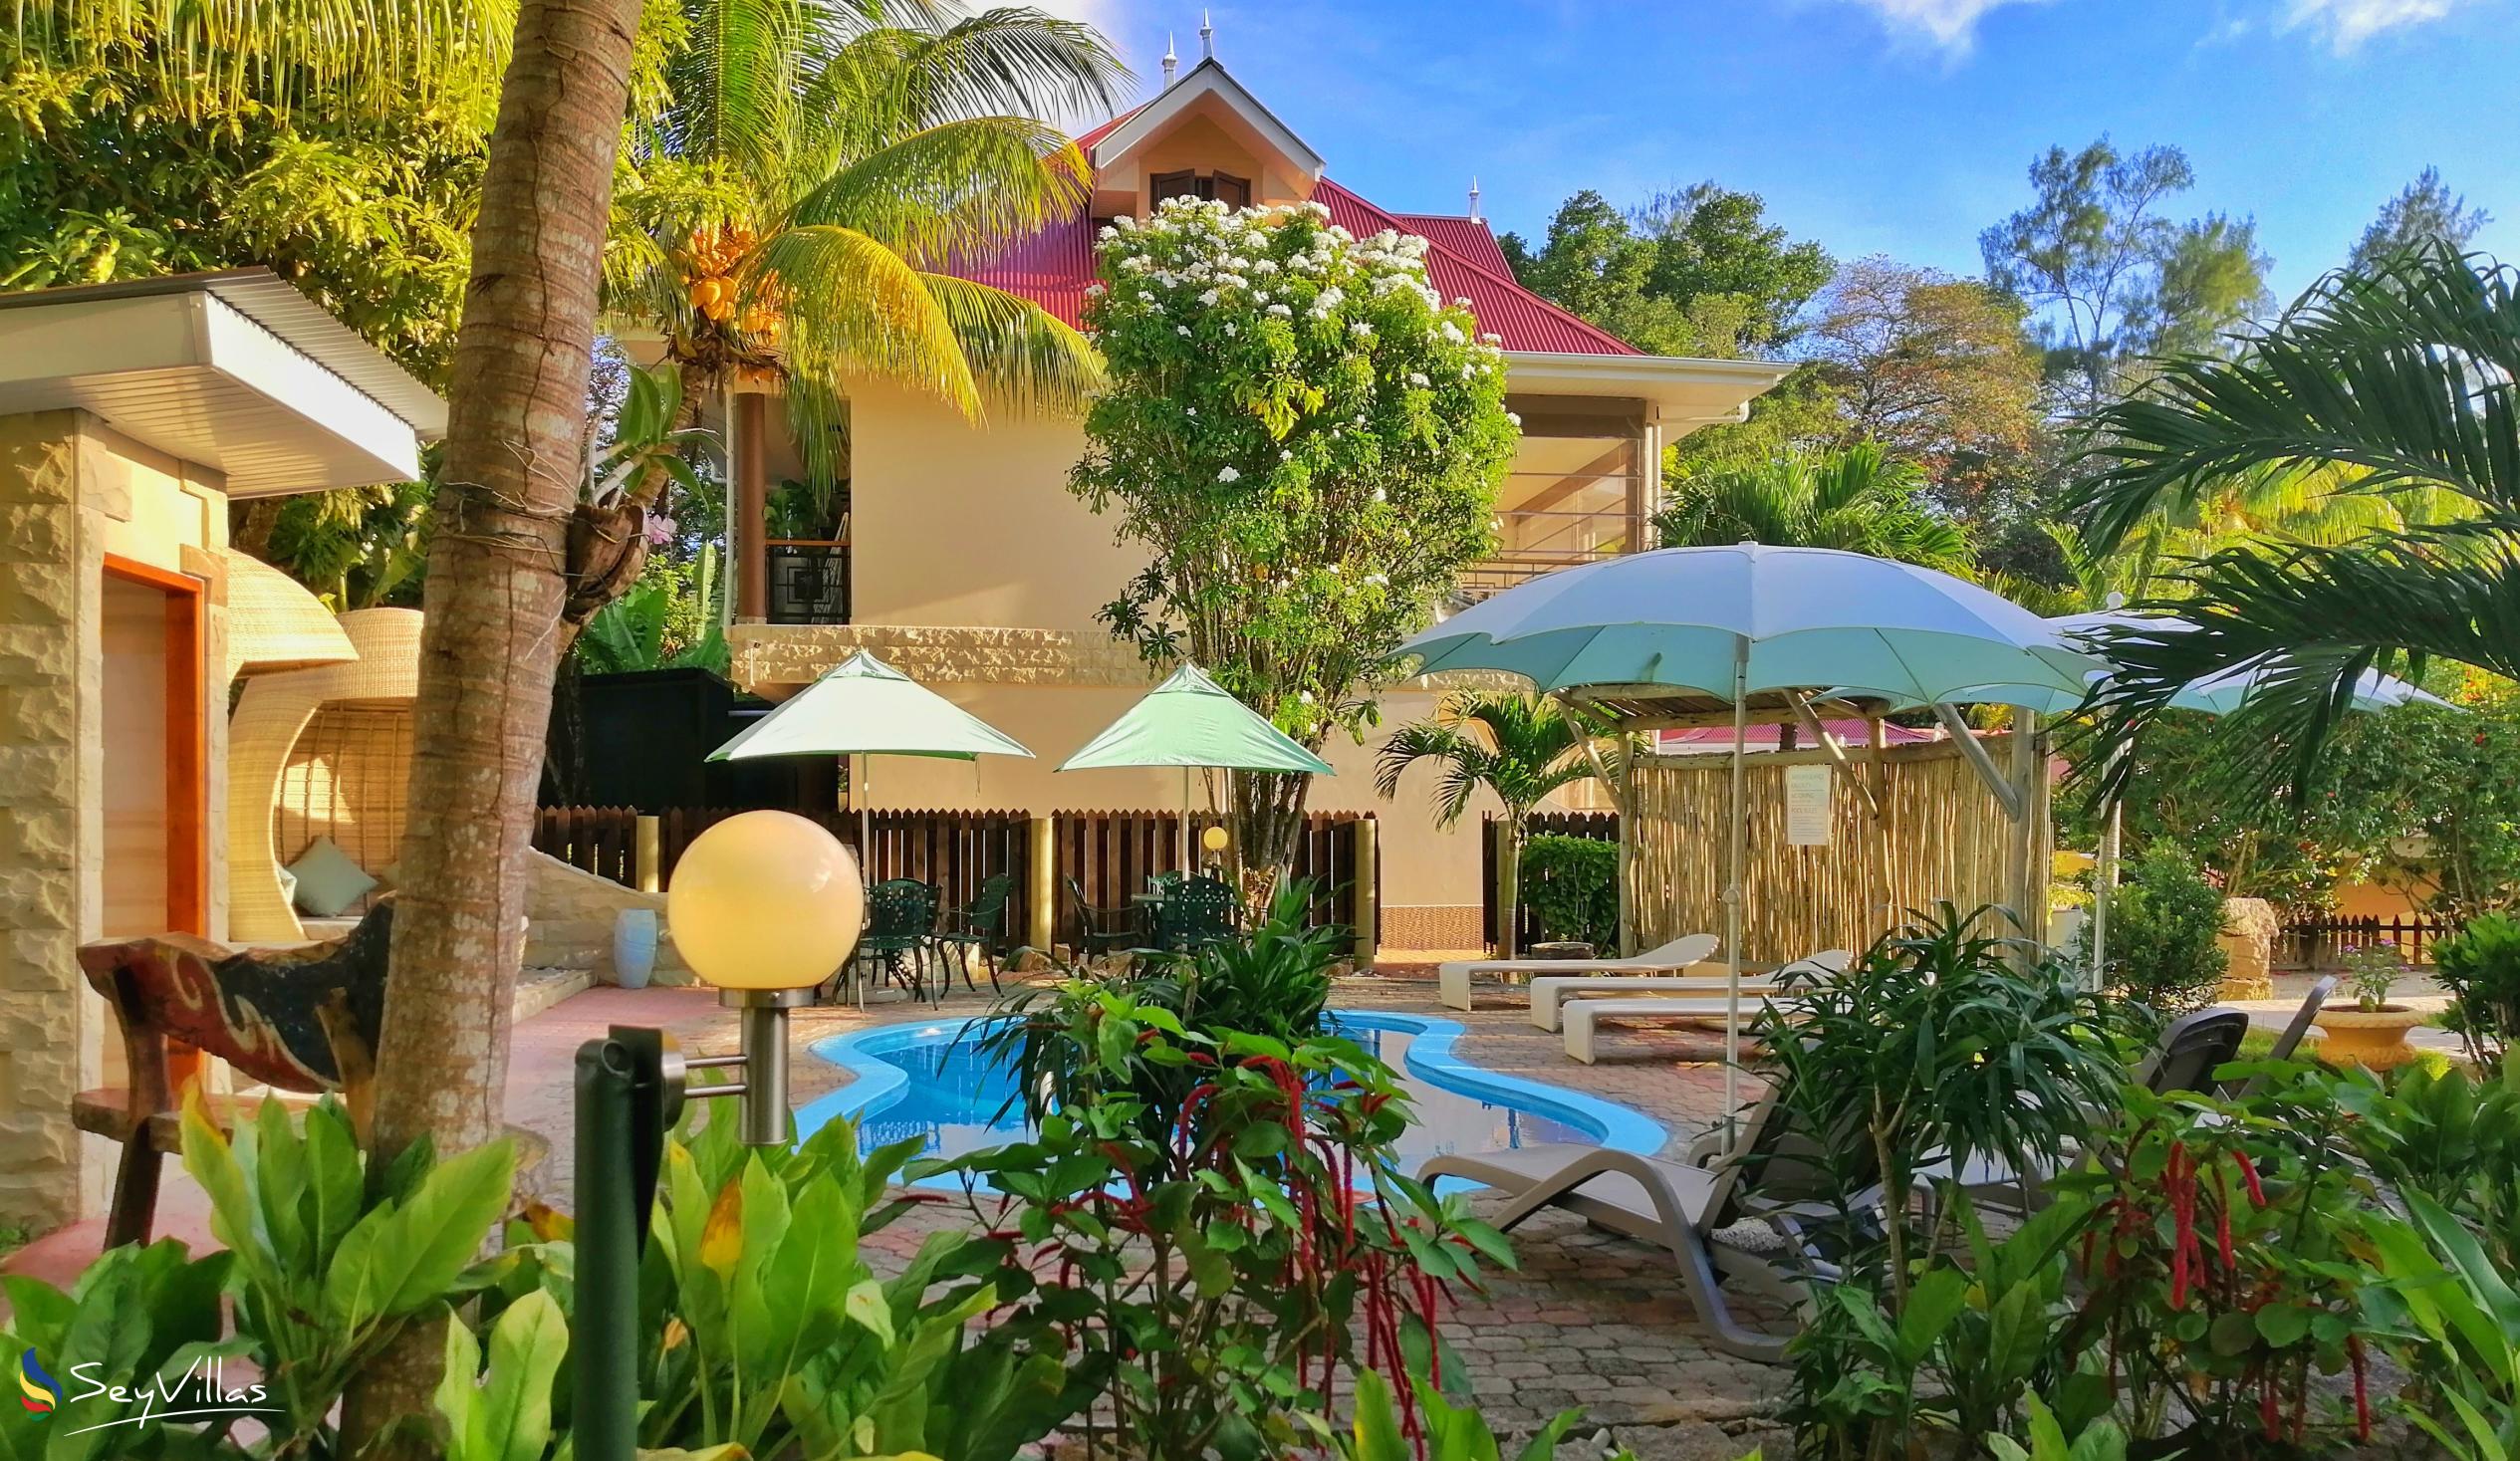 Foto 161: Casa de Leela - Aussenbereich - La Digue (Seychellen)